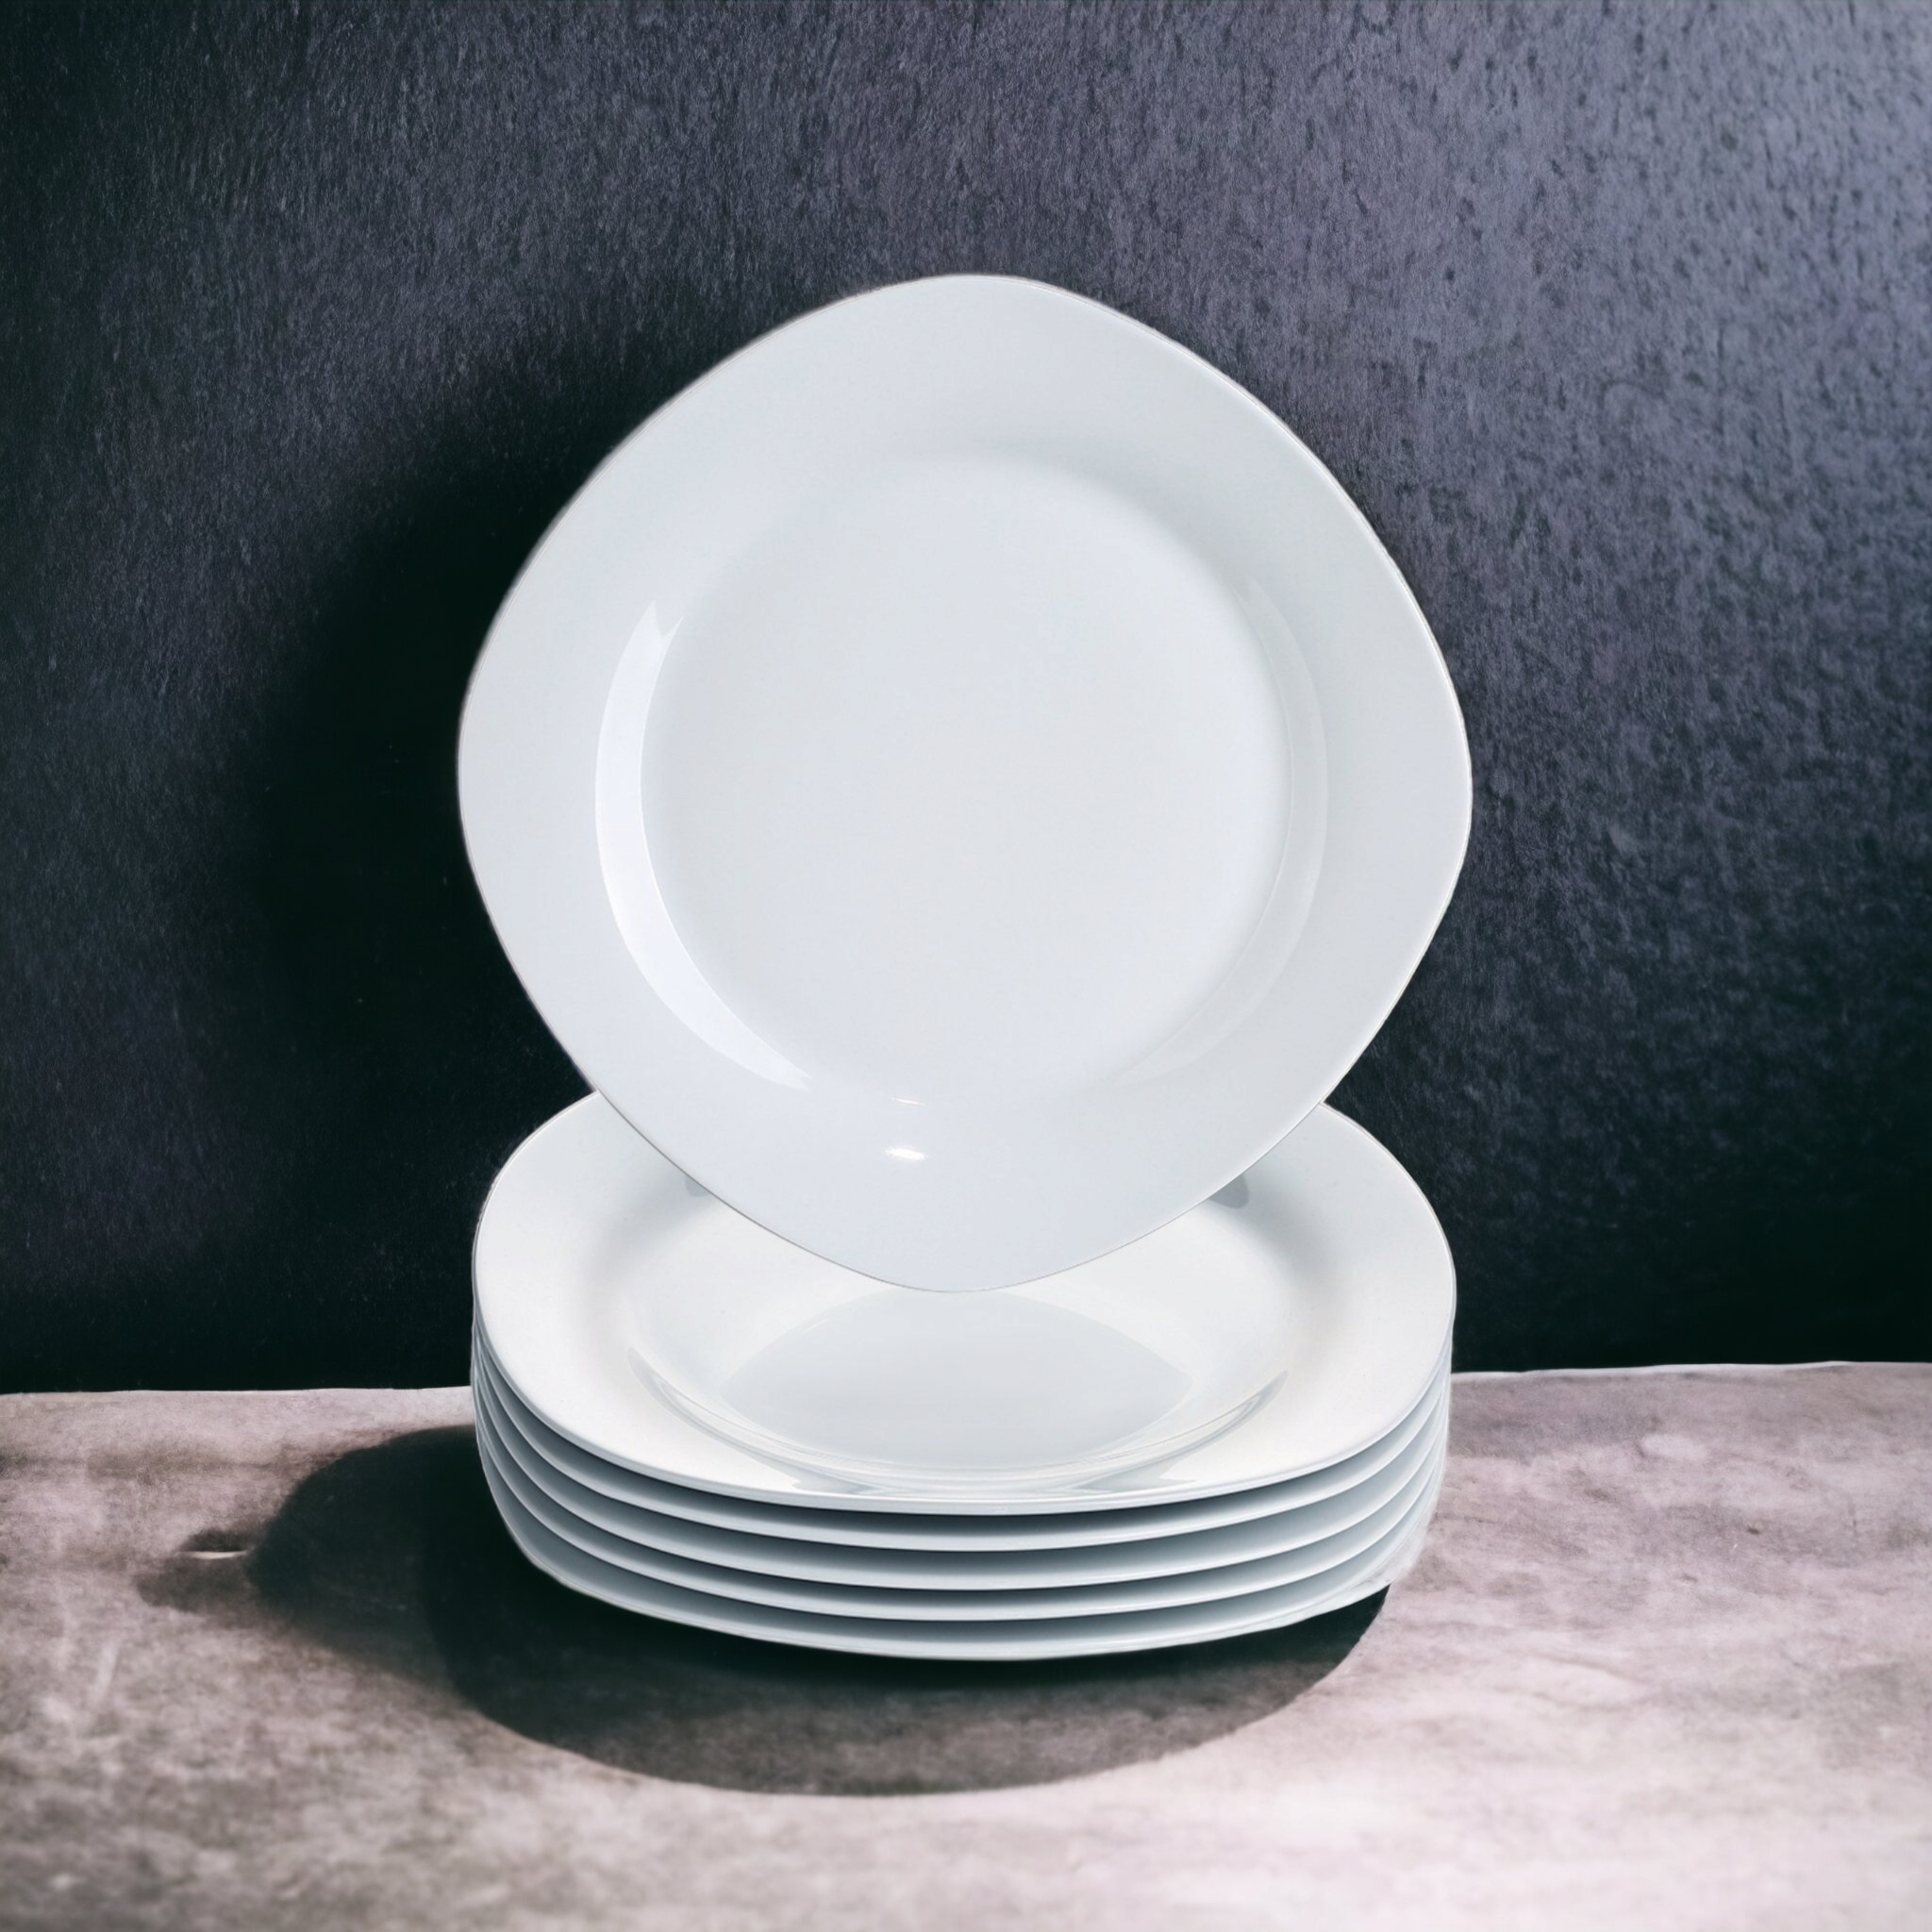 Ceramic Dinner Plate 10.5inch Square White